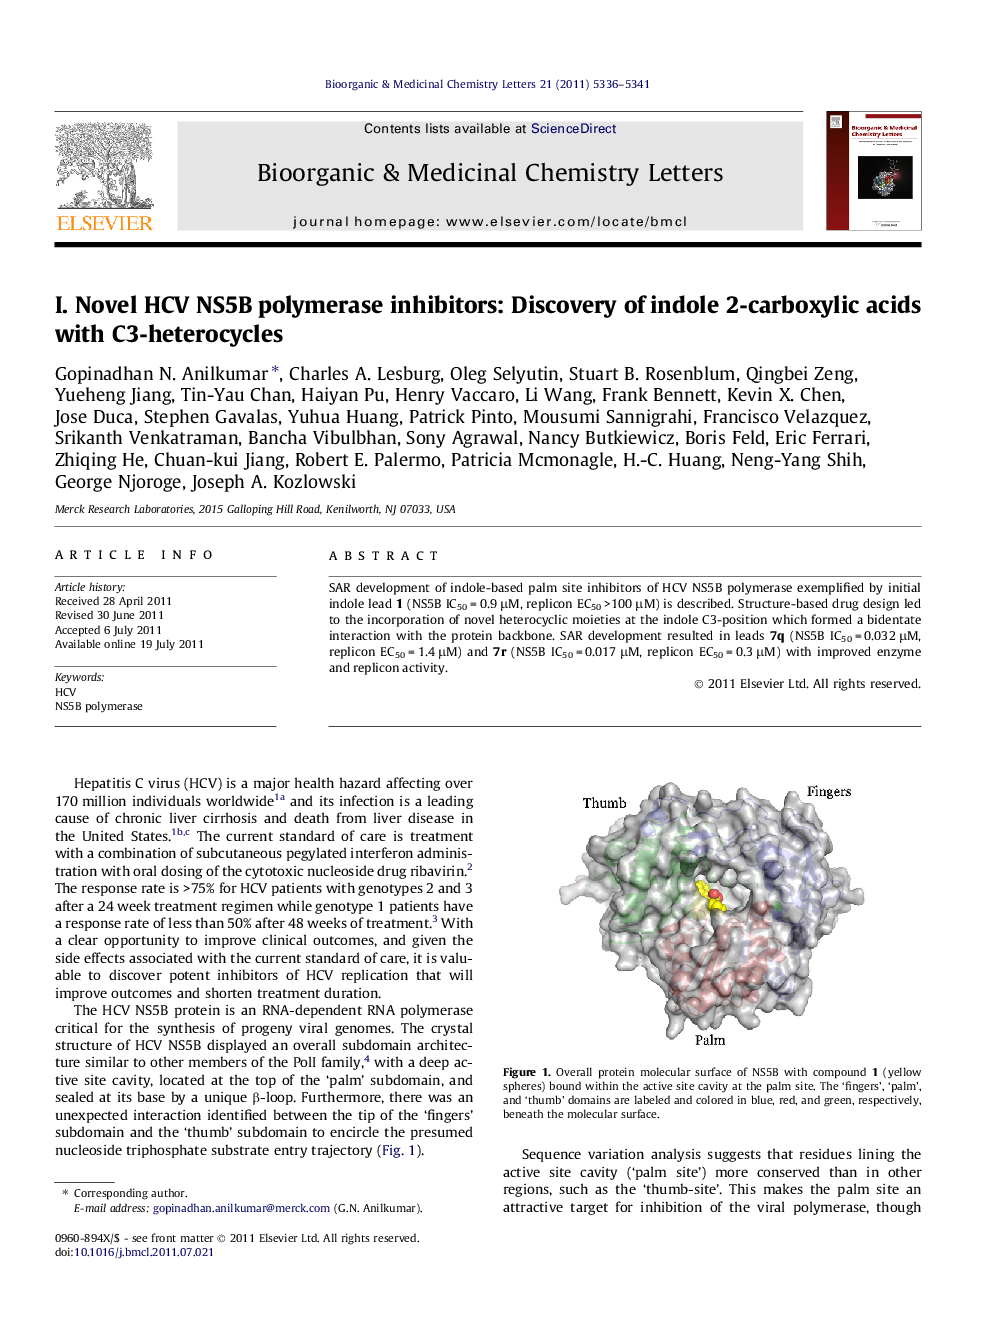 I. Novel HCV NS5B polymerase inhibitors: Discovery of indole 2-carboxylic acids with C3-heterocycles